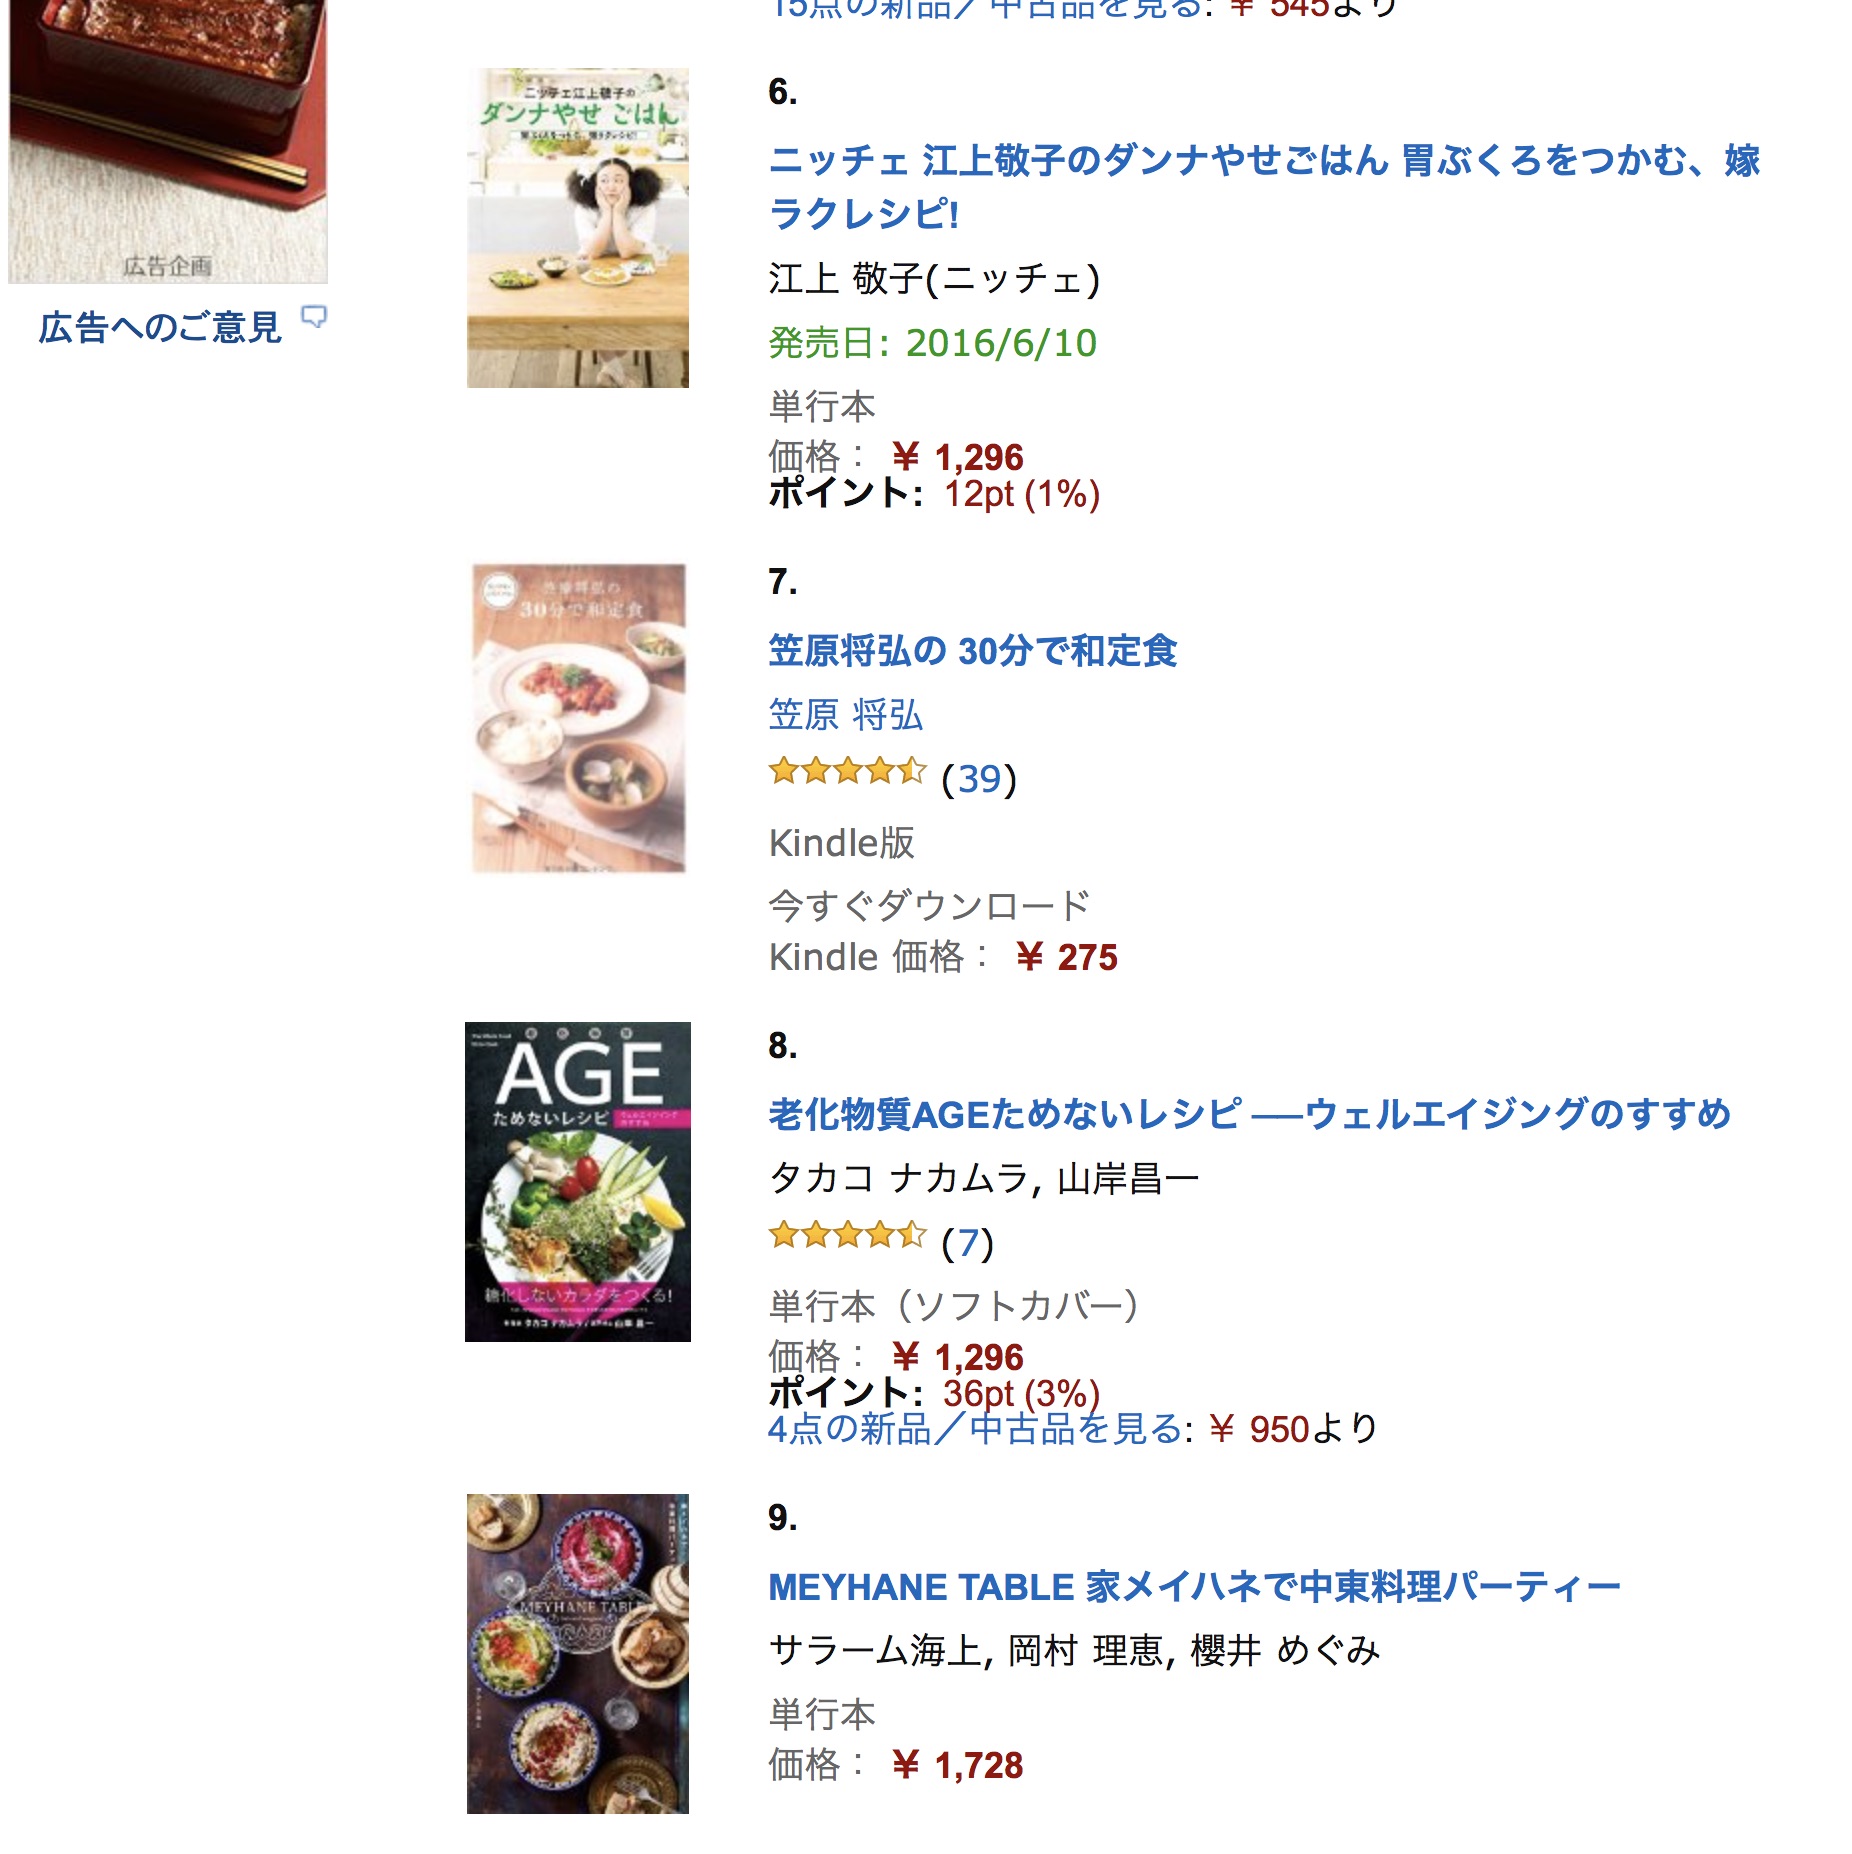 MEYHANE TABLE Amazonクッキング・レシピ第９位＆本・総合326位！